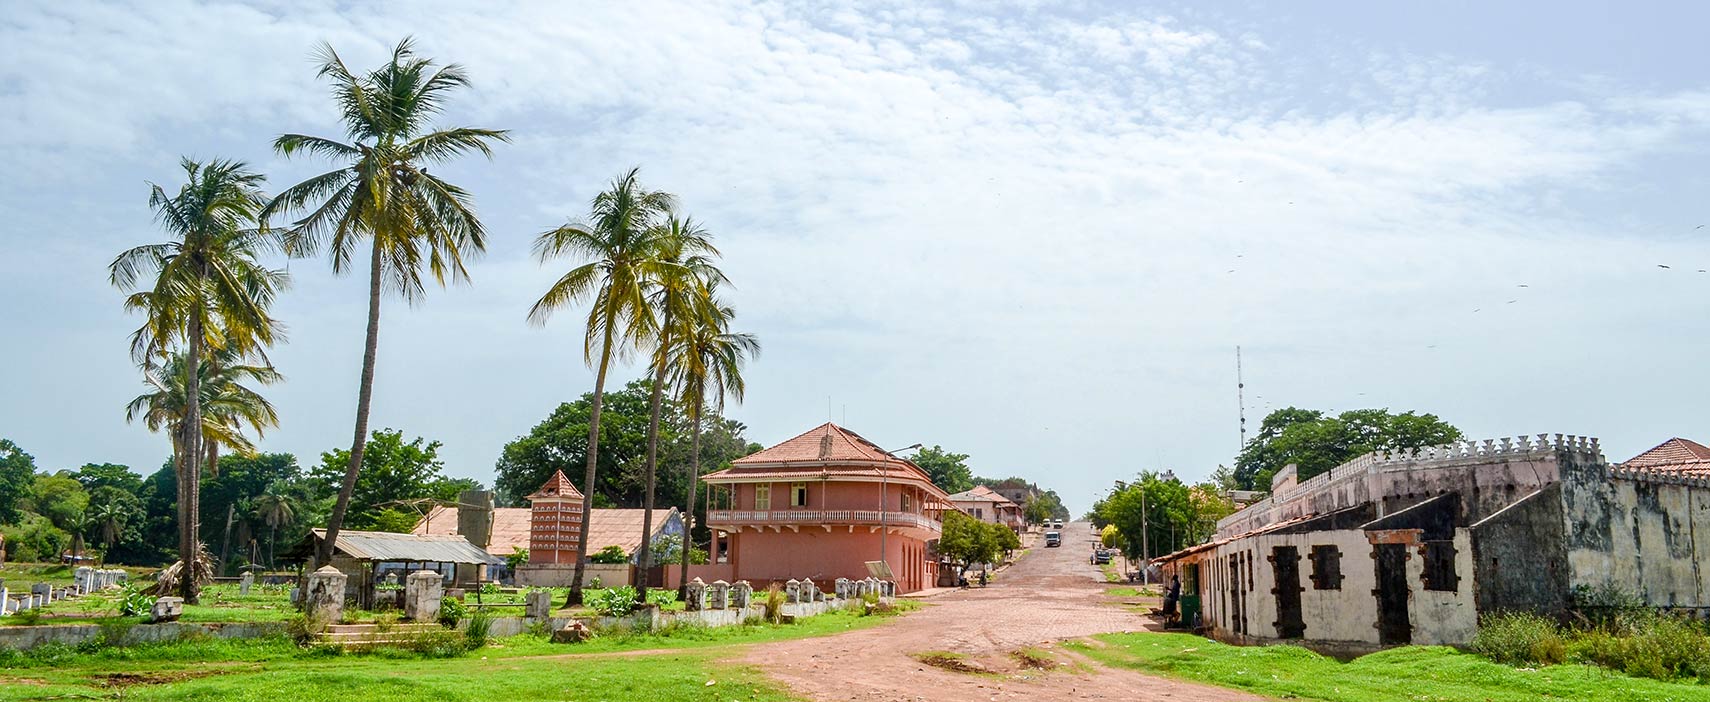 Bafata-Guinea-Bissau-Timeline-PolyglotClub.jpg